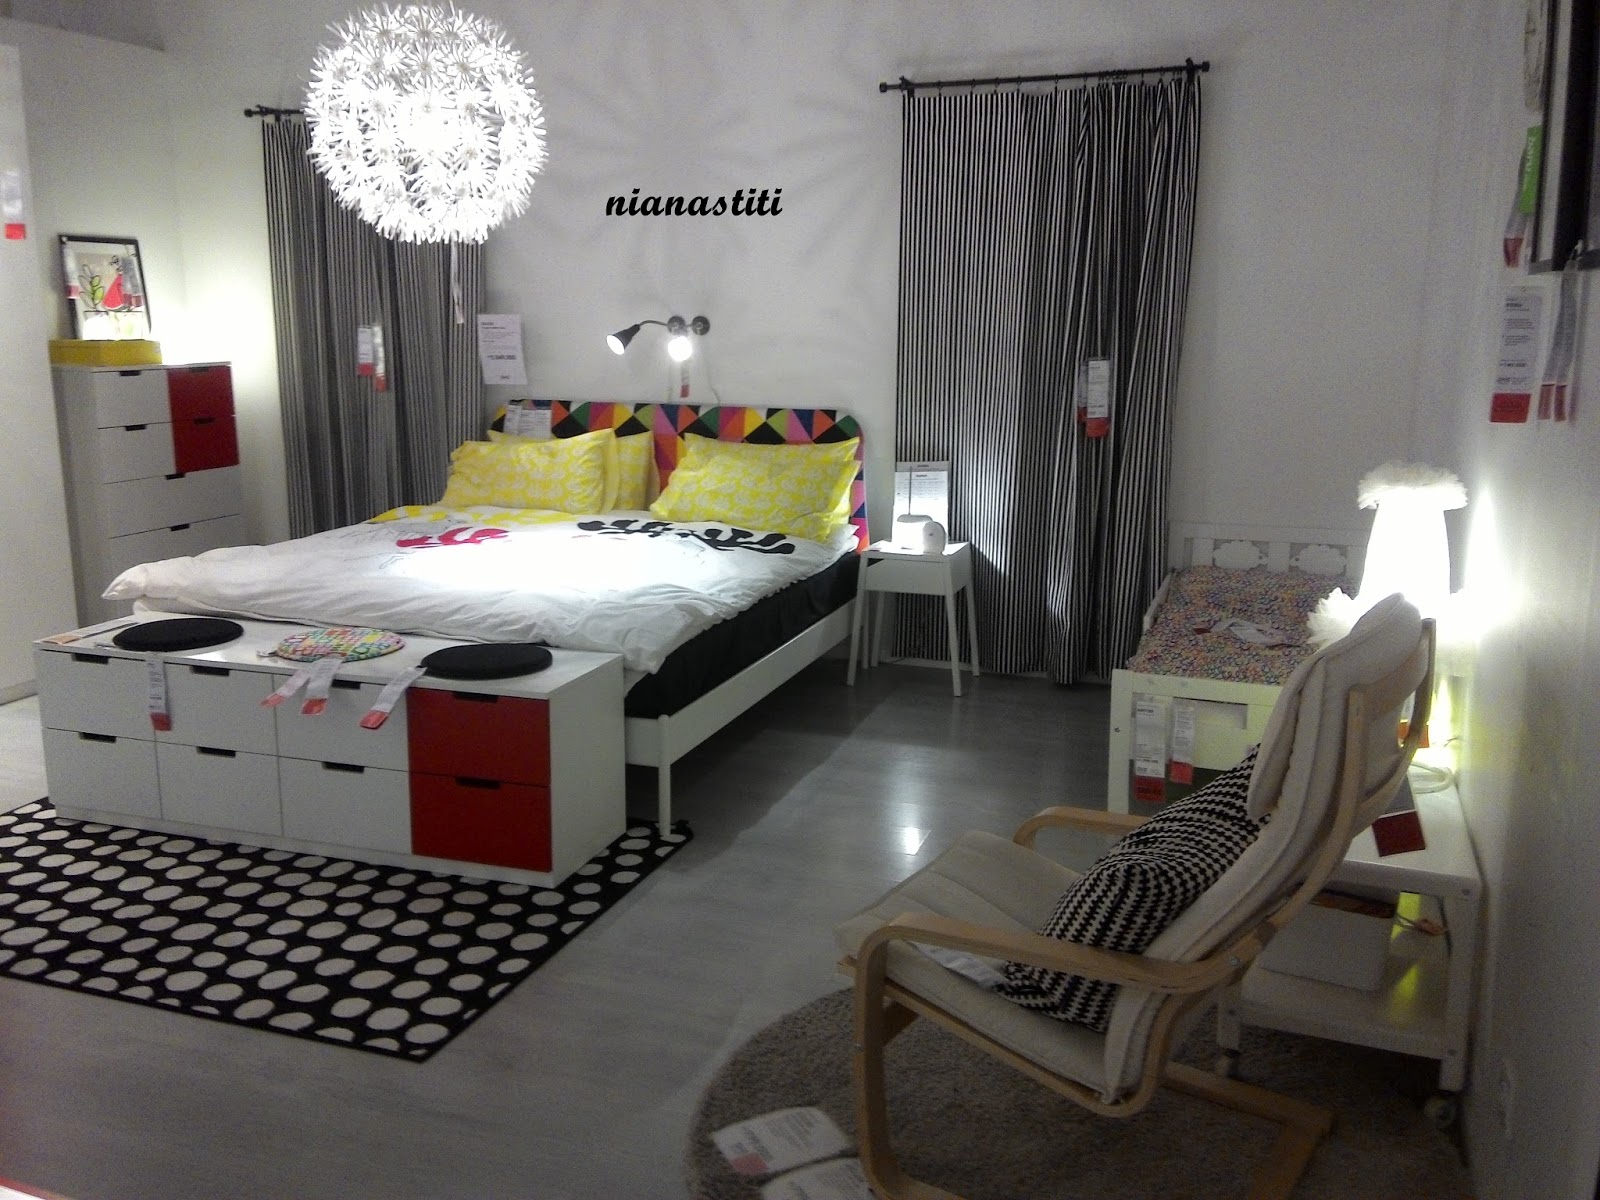 Desain Kamar Tidur Minimalis Ikea | Arsihome